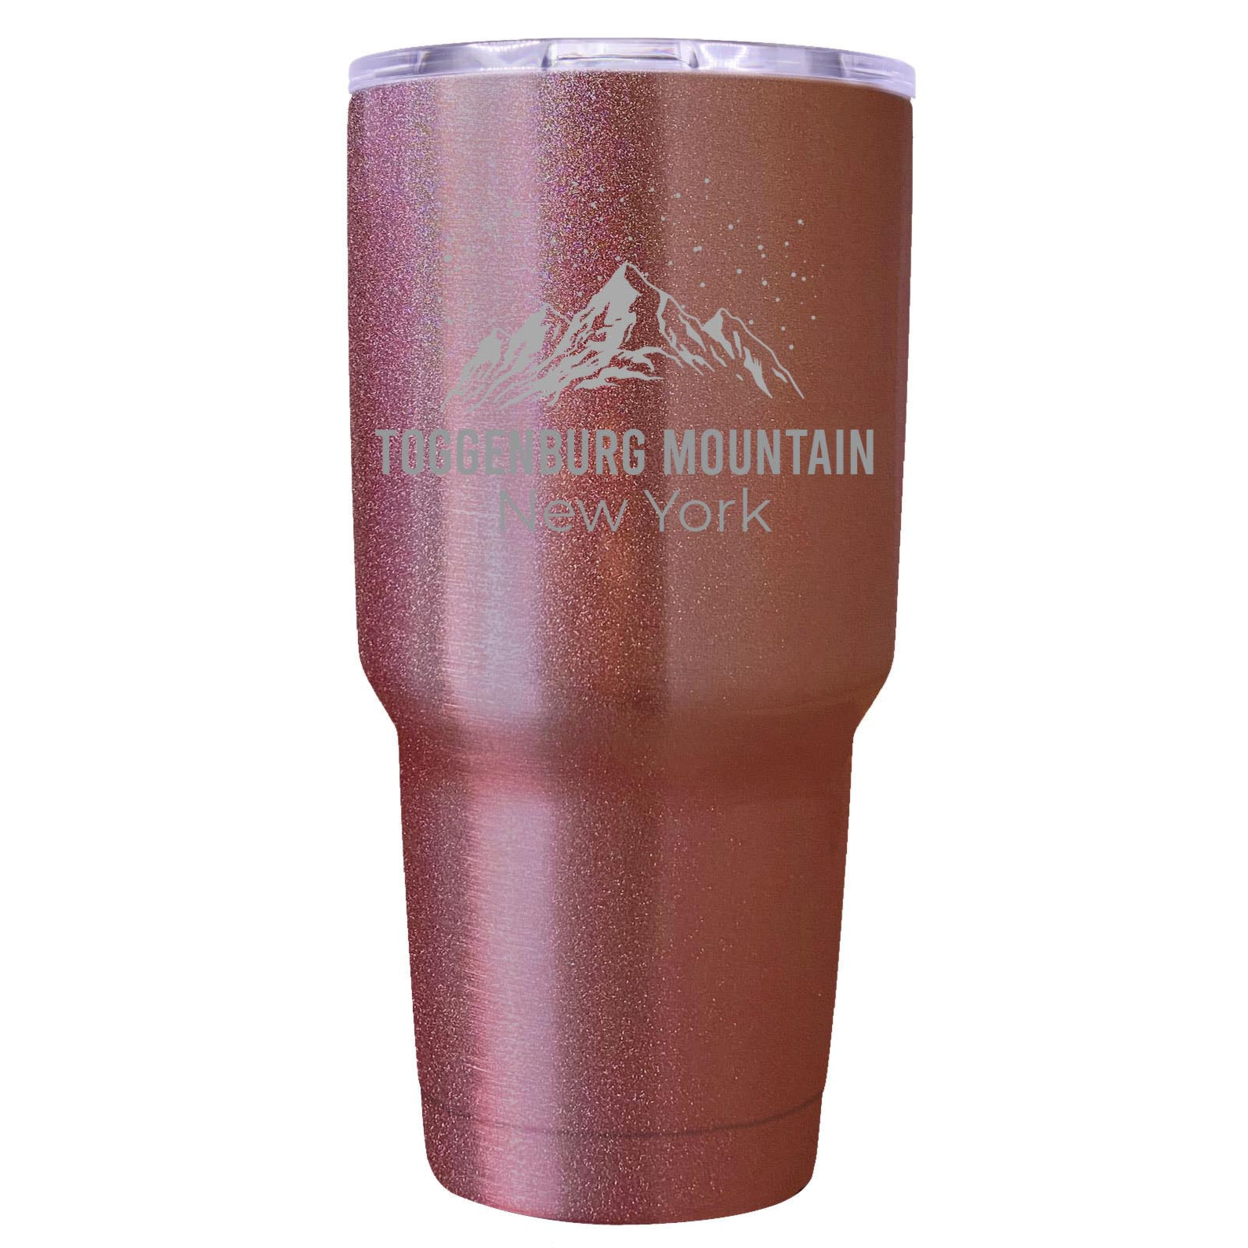 Toggenburg Mountain New York Ski Snowboard Winter Souvenir Laser Engraved 24 Oz Insulated Stainless Steel Tumbler - Rose Gold